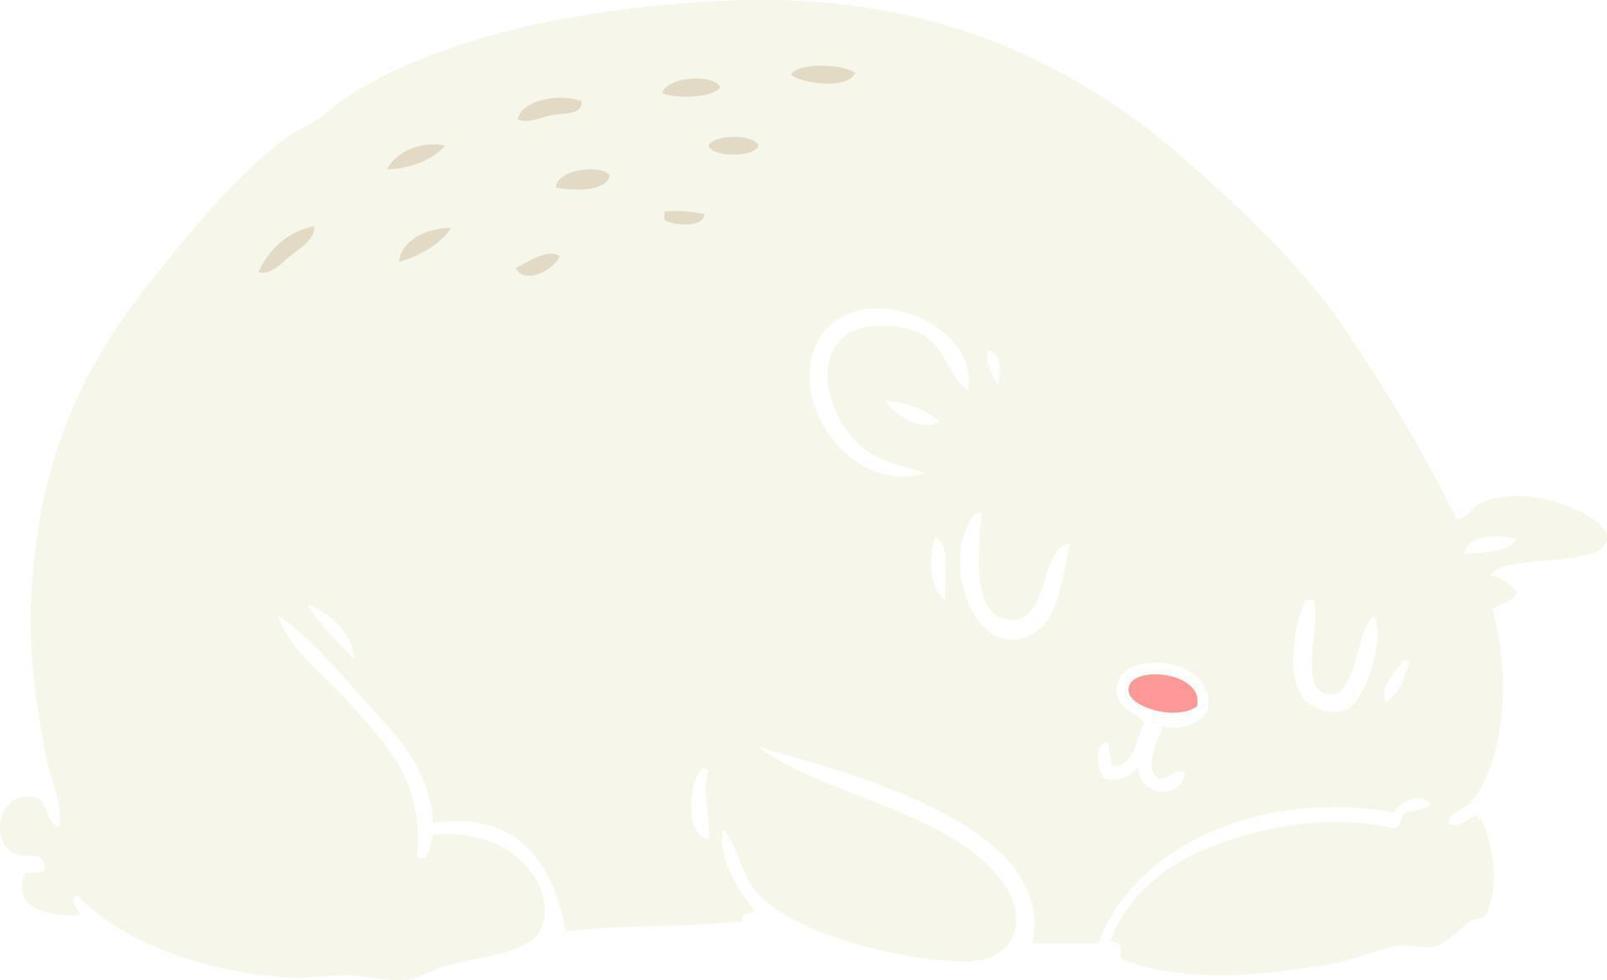 oso polar soñoliento de dibujos animados de estilo de color plano vector